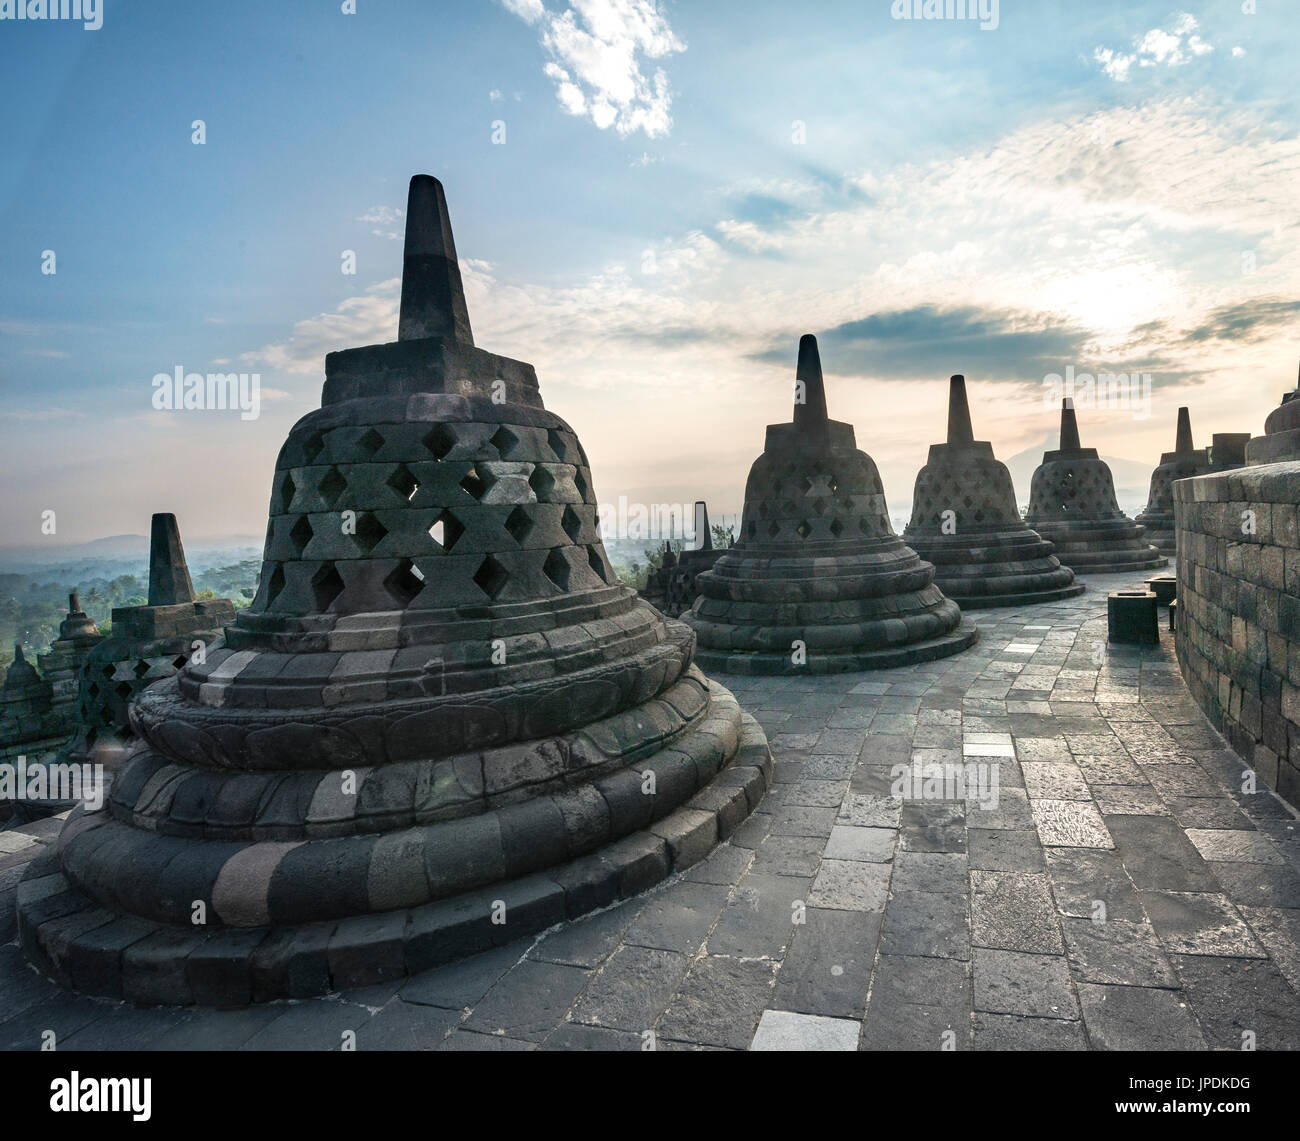 Complexe du temple Borobudur, stupas, Borobudur, Yogyakarta, Java, Indonésie Banque D'Images